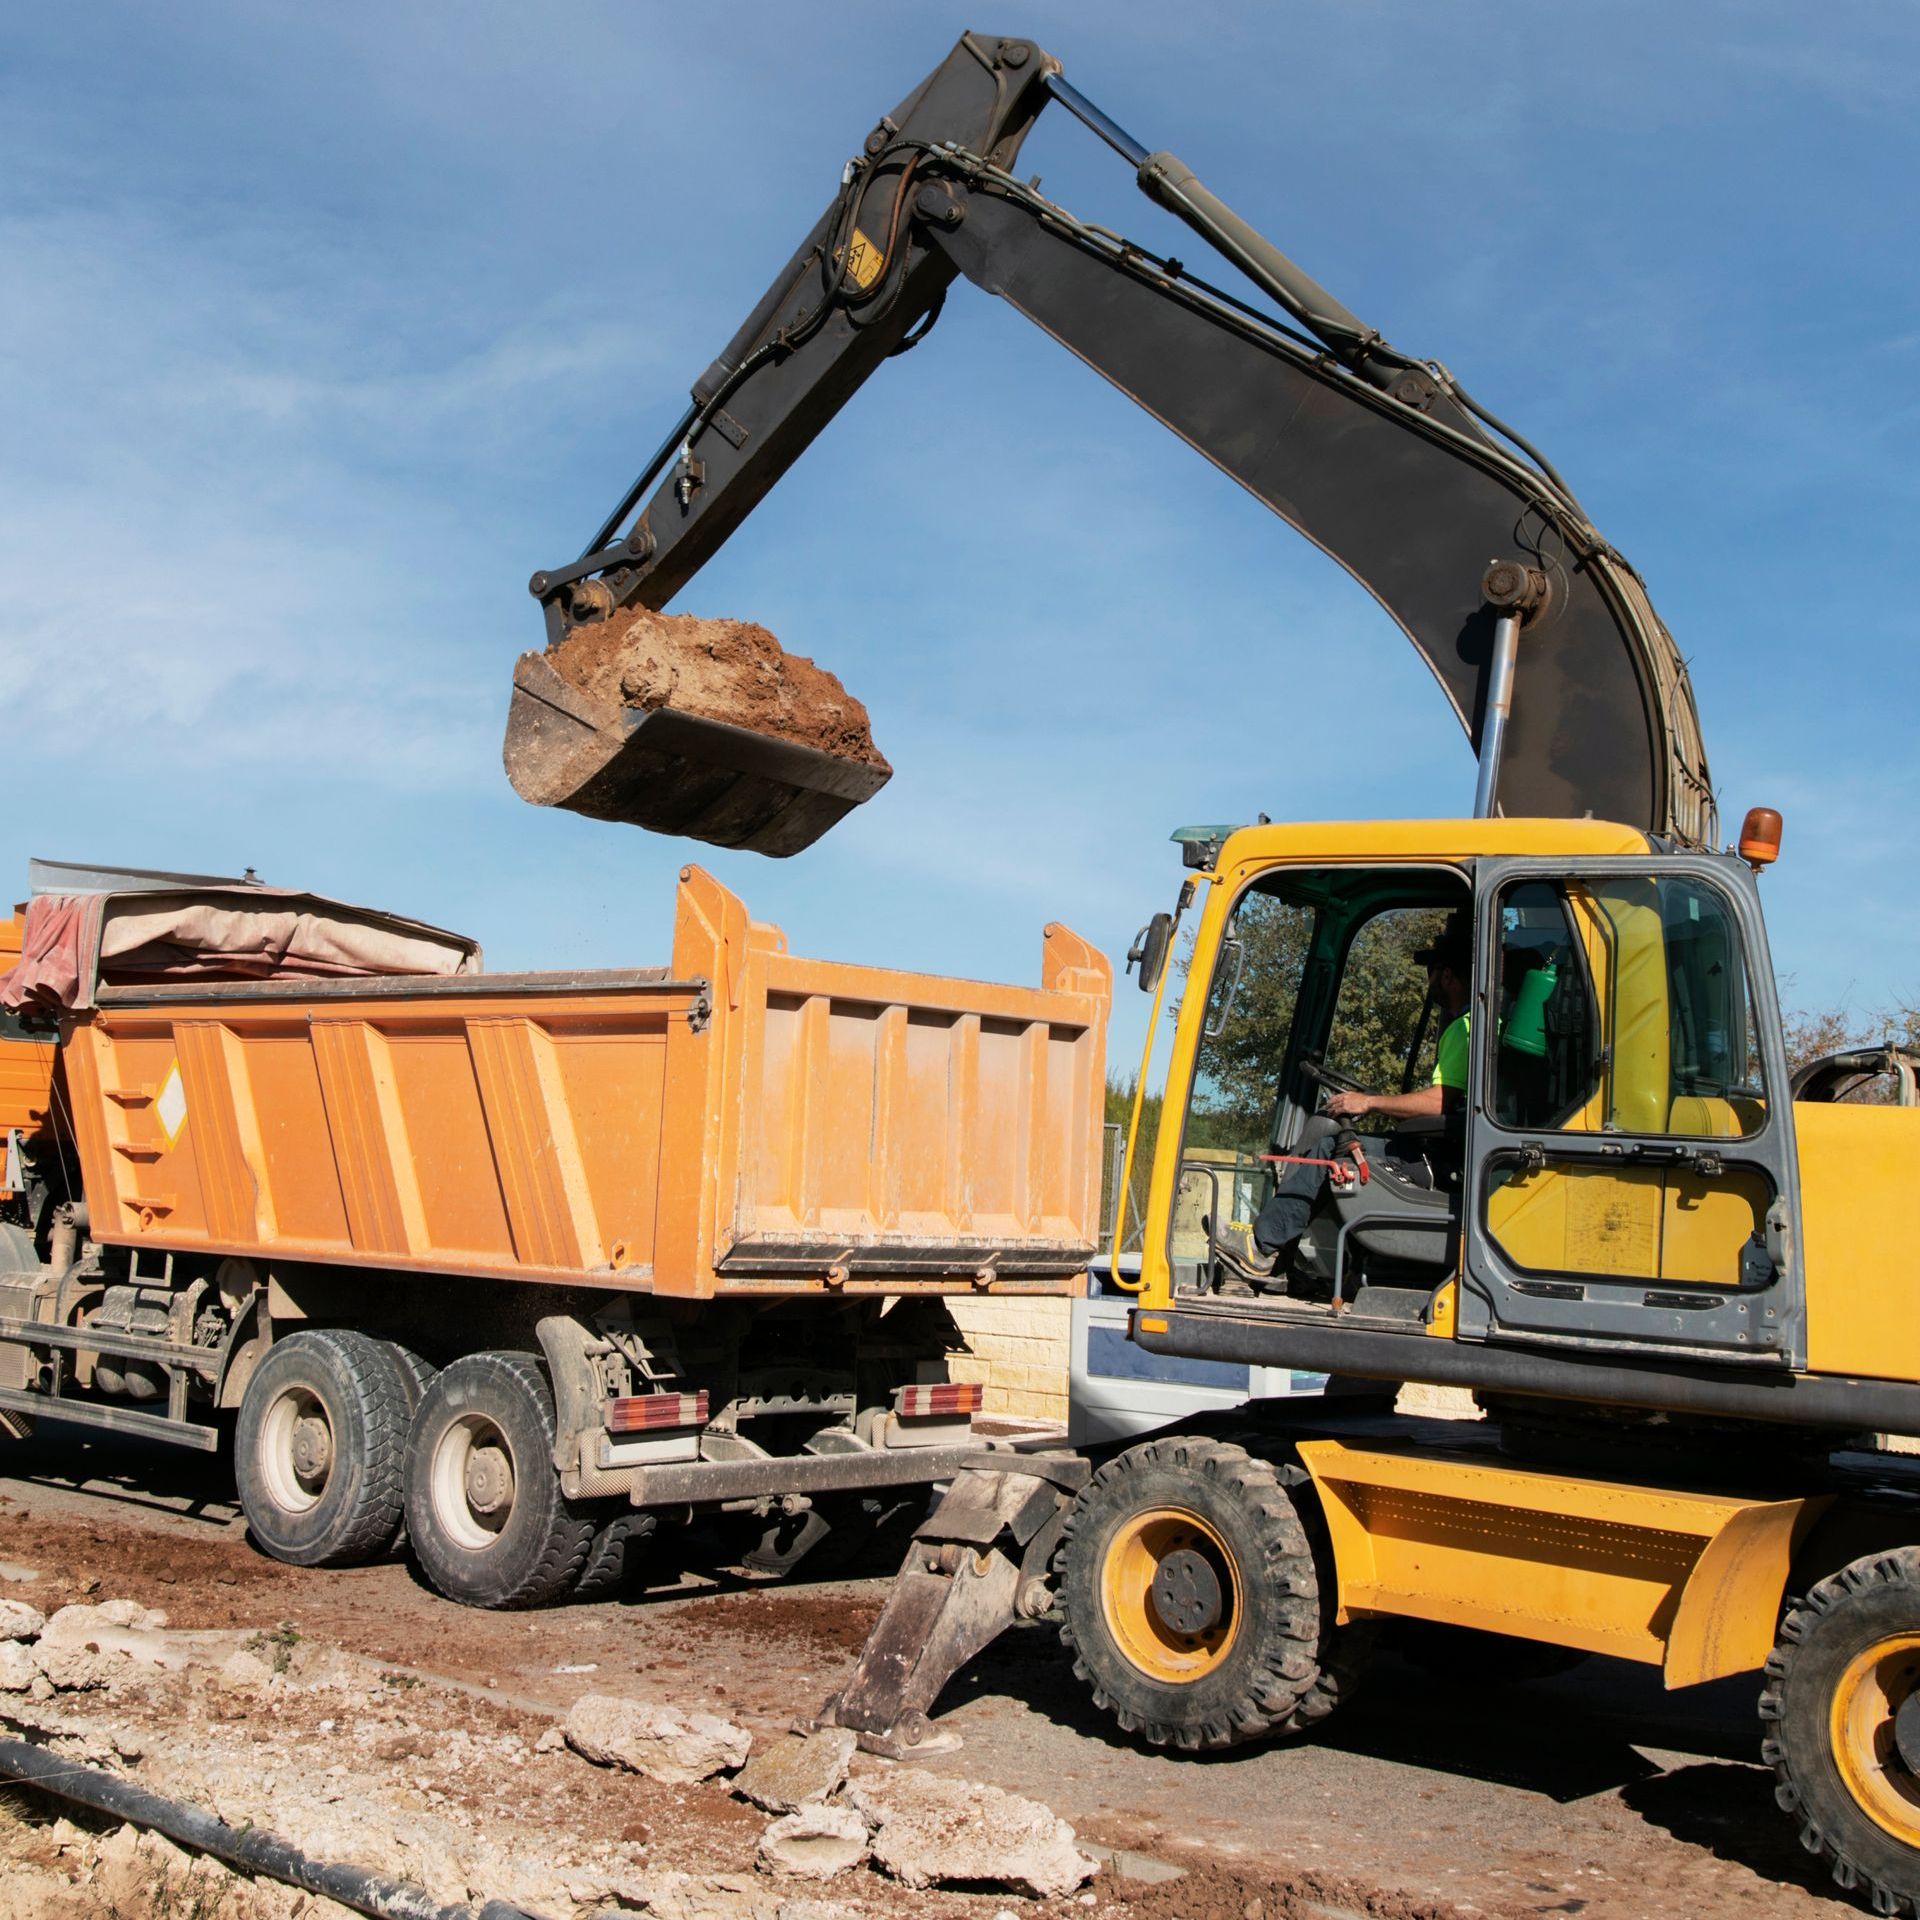 Excavator loading debris in truck